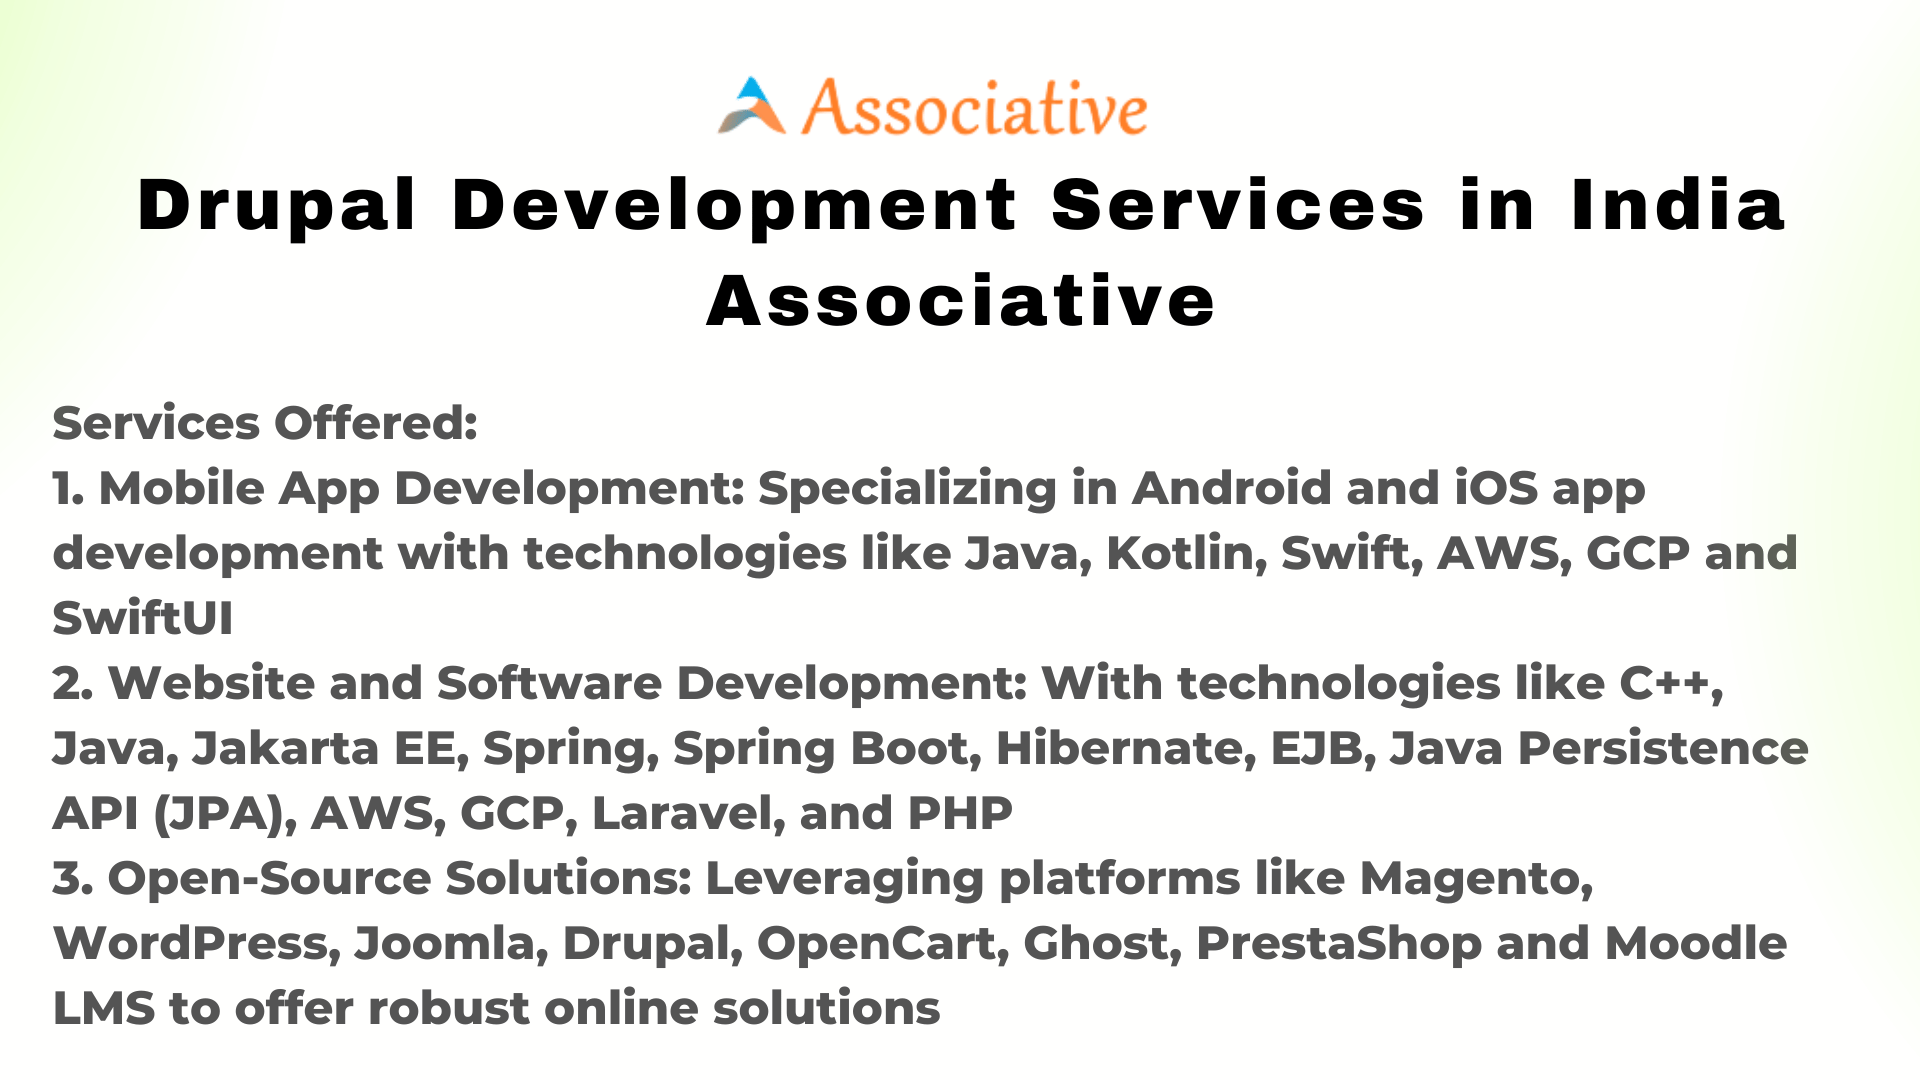 Drupal Development Services in India Associative